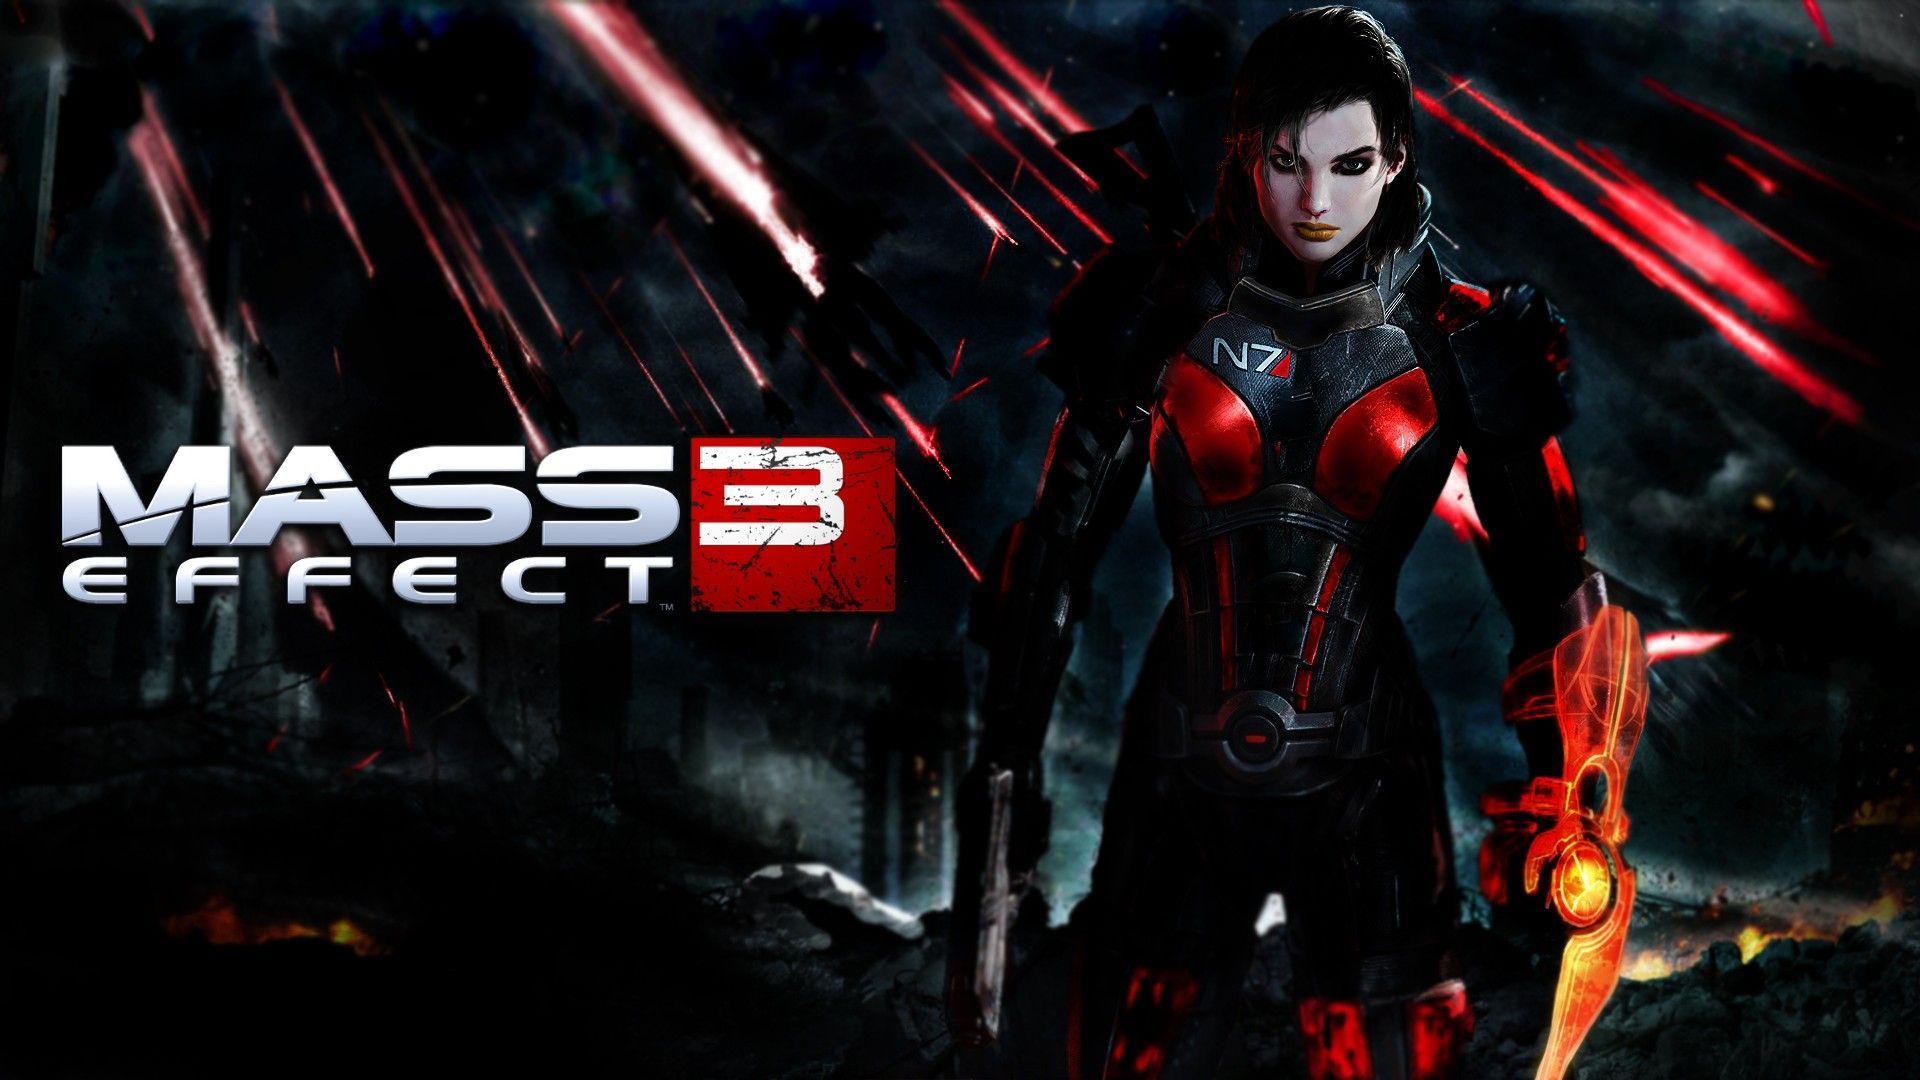 Mass Effect 3 Desktop Wallpapers - HD Wallpapers Backgrounds of ...